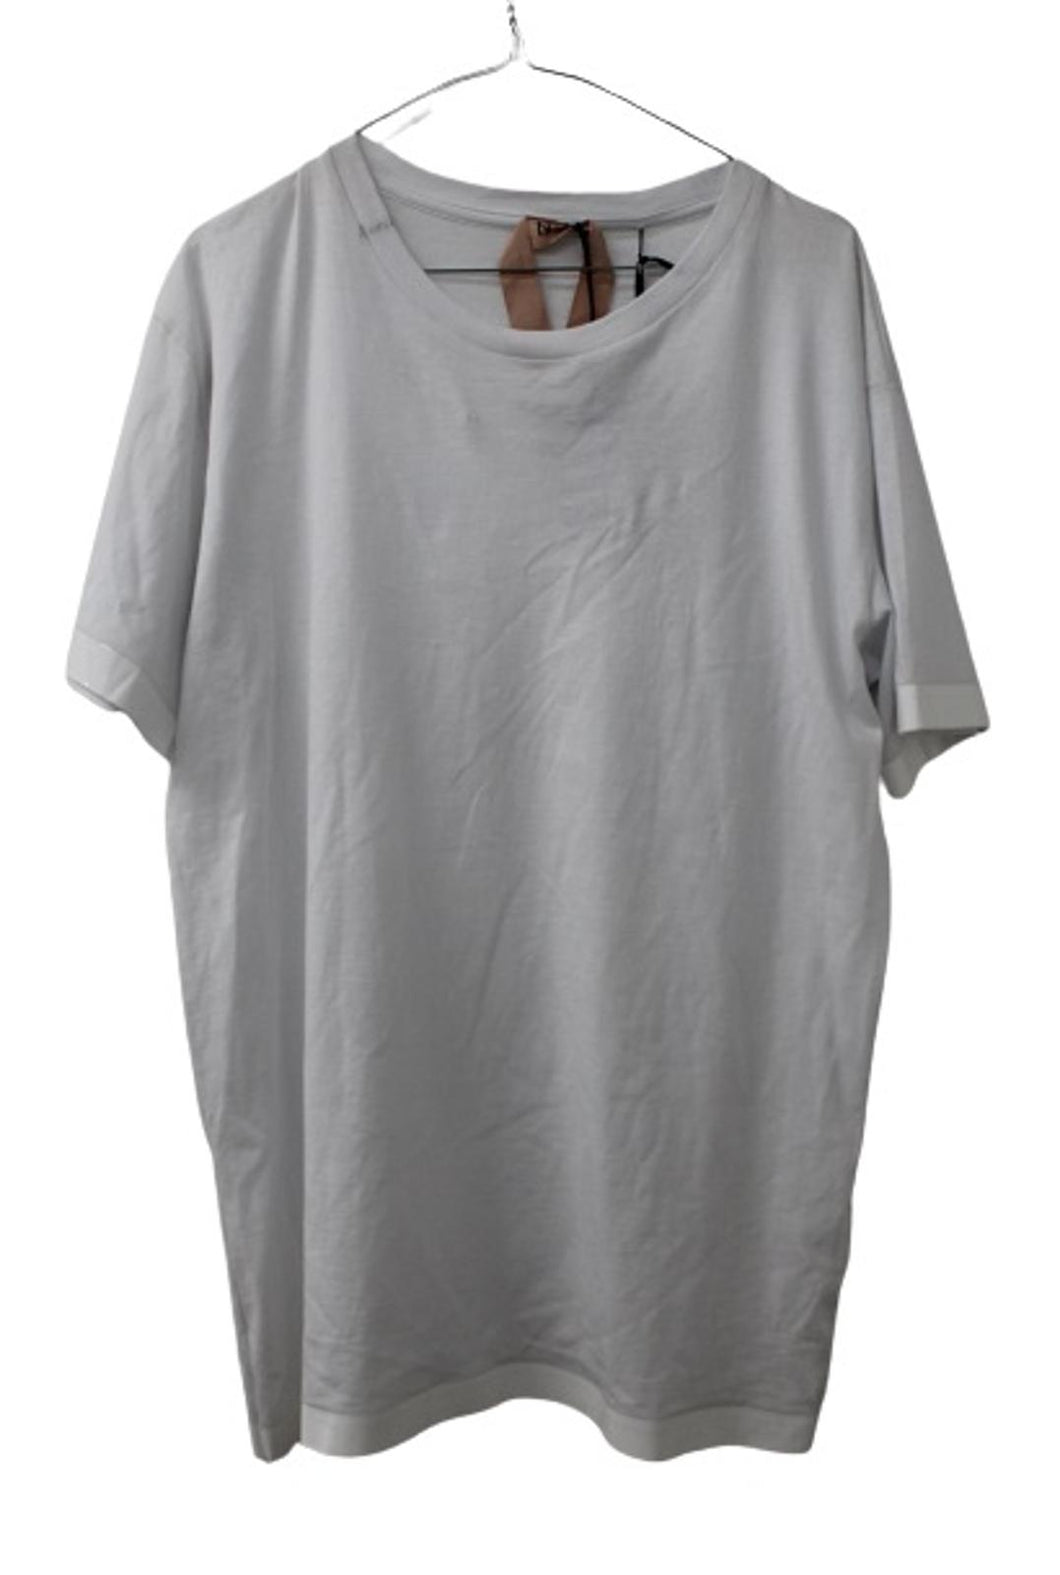 Nø21 GILMAR Men's 5D White Short Sleeve Cotton Jersey T-Shirt 42/L NEW RRP150